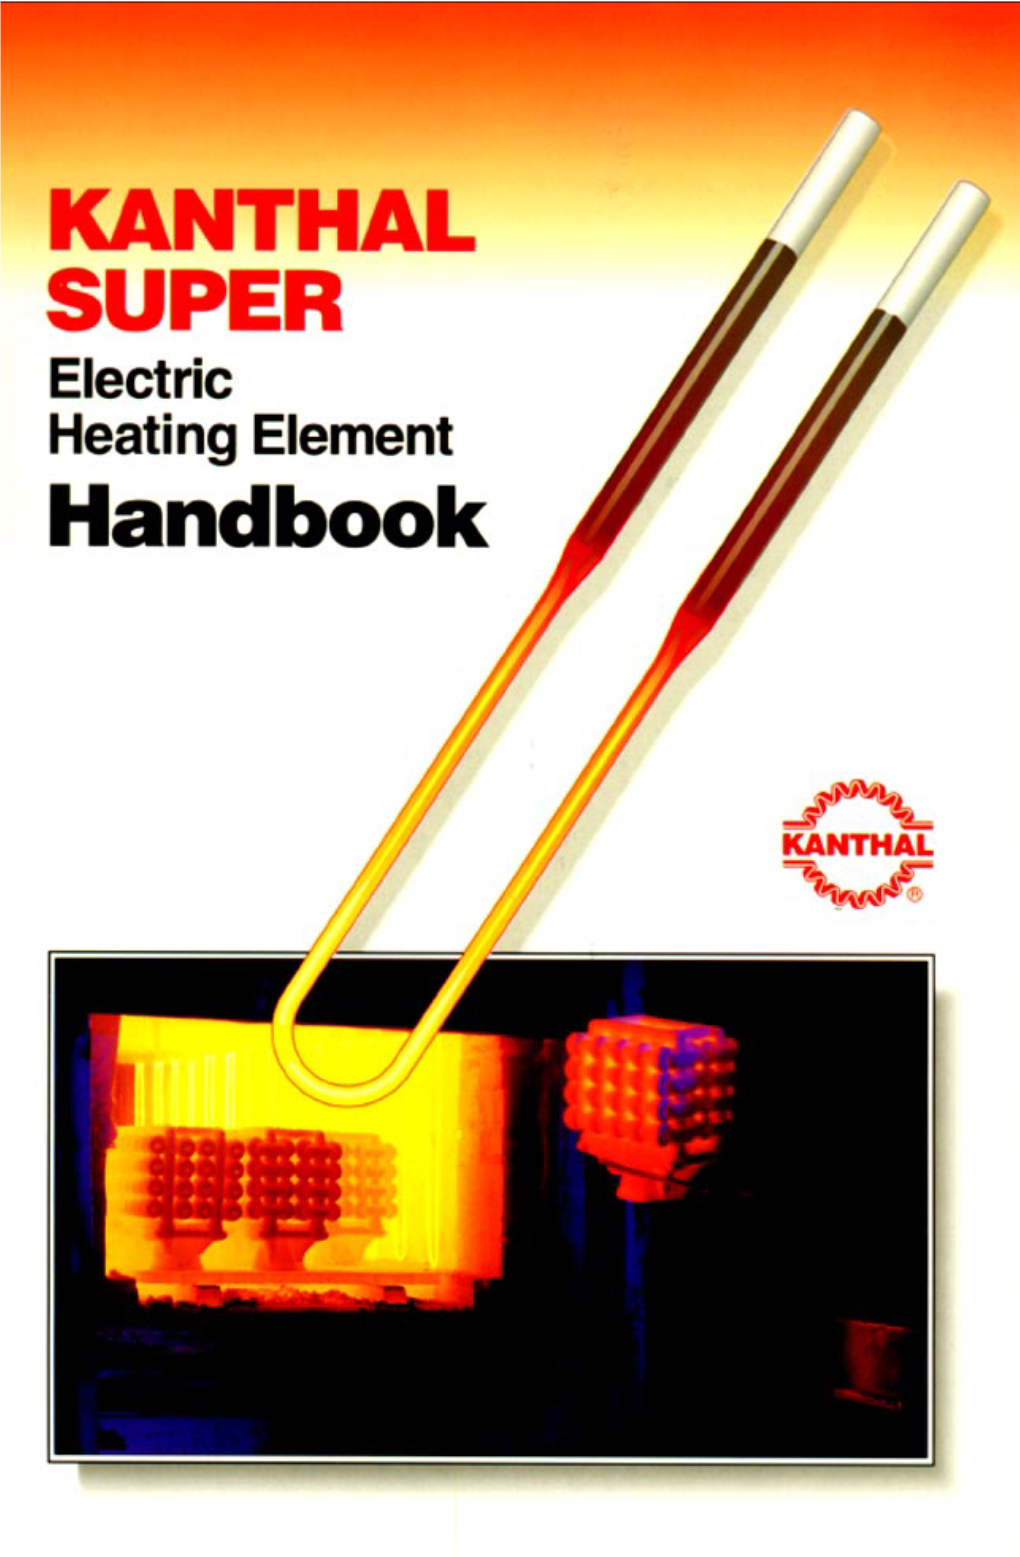 Kanthal Super Electric Heating Elements (Handbook)